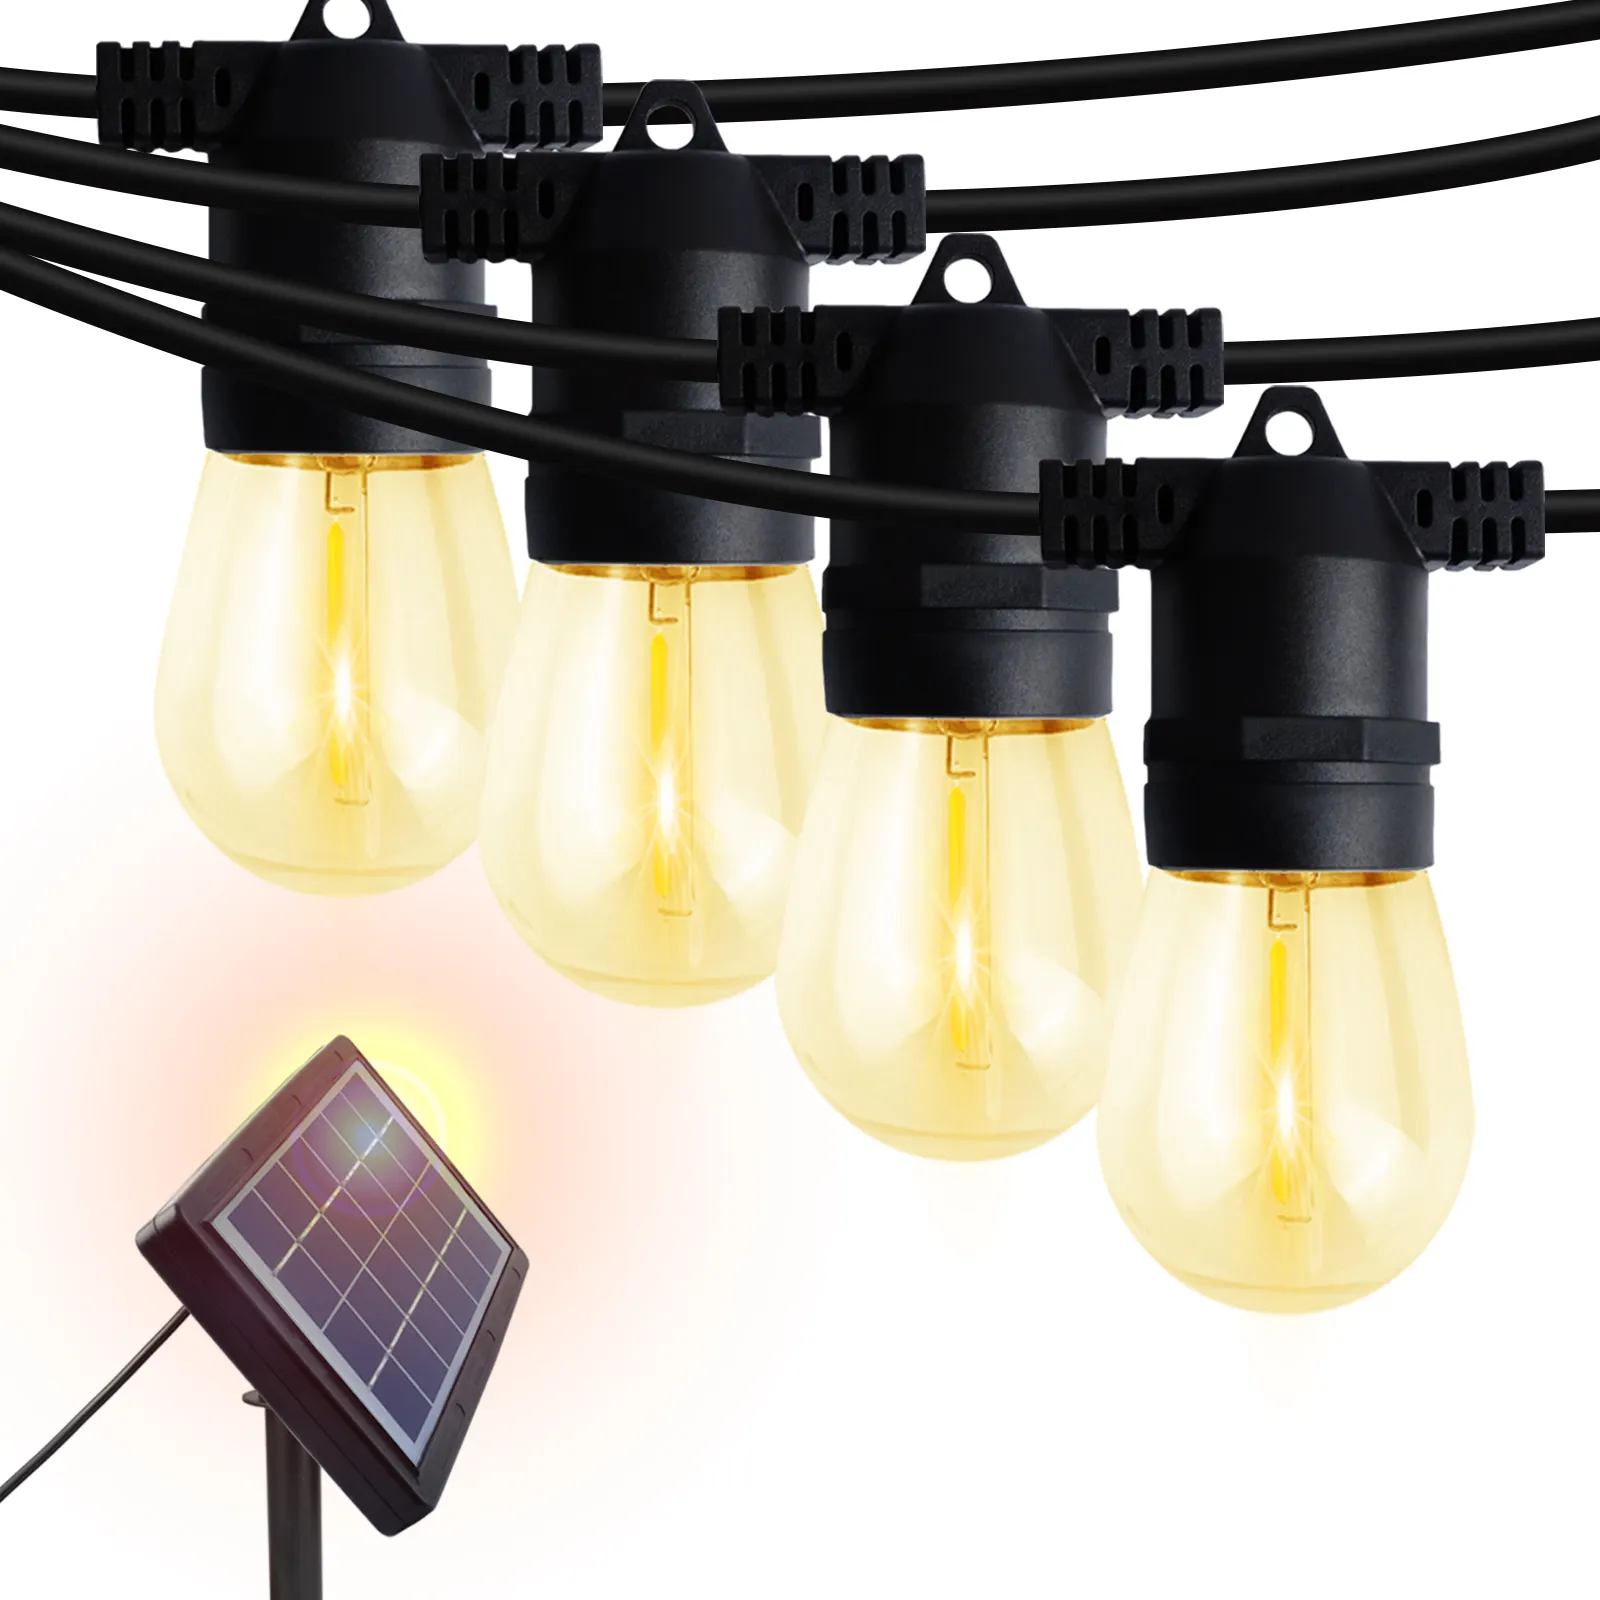 Newest Festoon string light S14 3W 50FT 15 bulbs waterproof solar string lights for garden yard camping